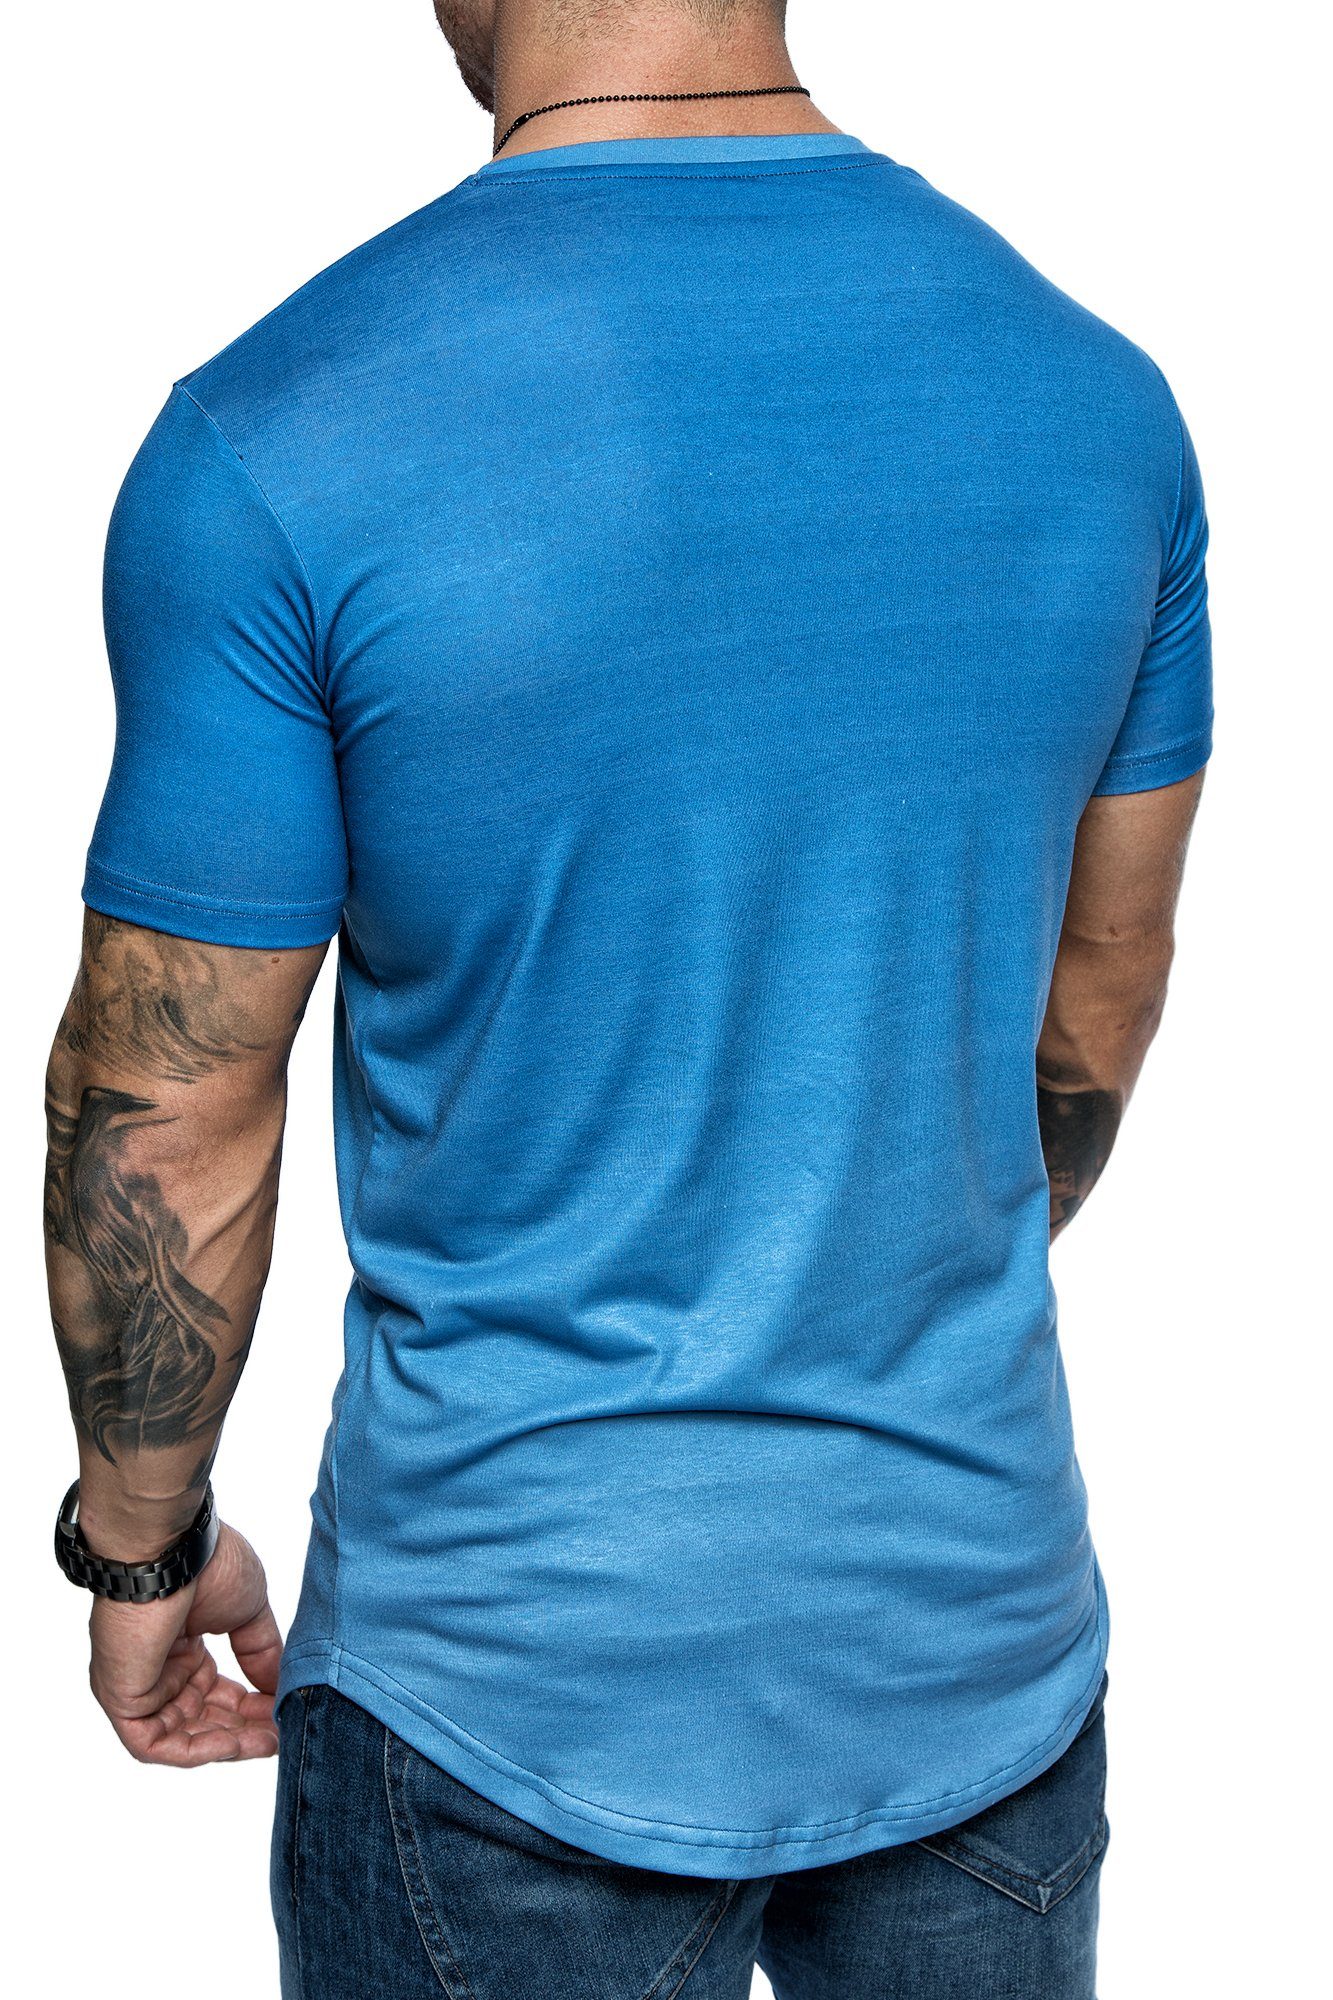 REPUBLIX T-Shirt LIAM Herren Oversize Shirt Design Rundhalsausschnitt Crew Waterfall Royalblau/Türkis mit Neck